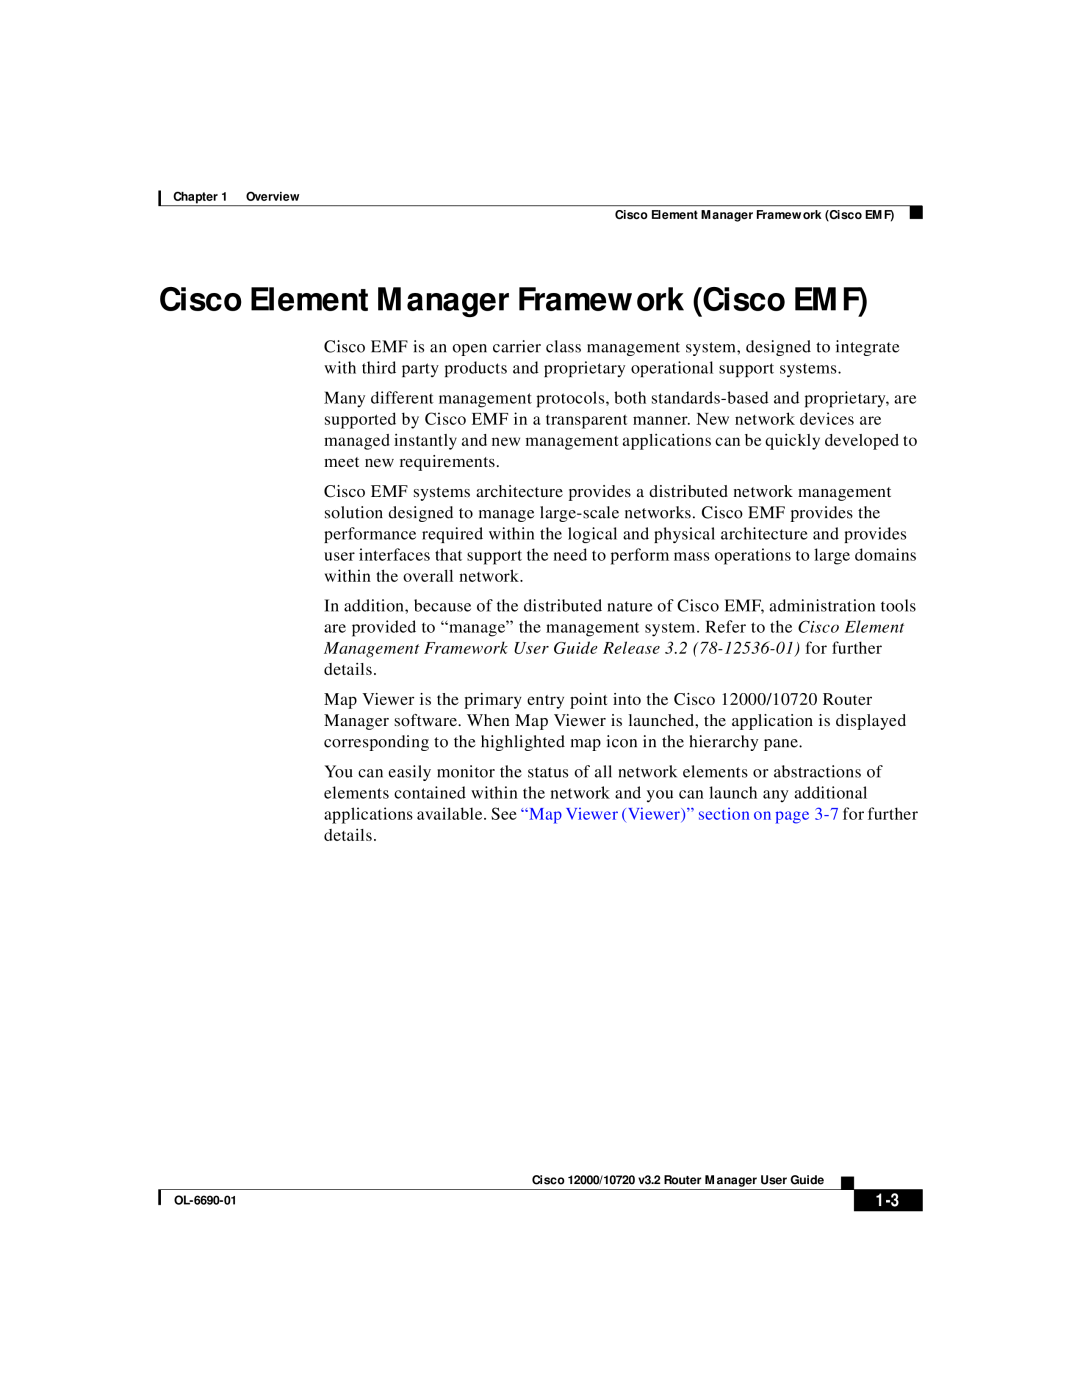 Cisco Systems Cisco 12012, Cisco 12416, Cisco 12016, Cisco 10720, Cisco 12008 manual Cisco Element Manager Framework Cisco EMF 